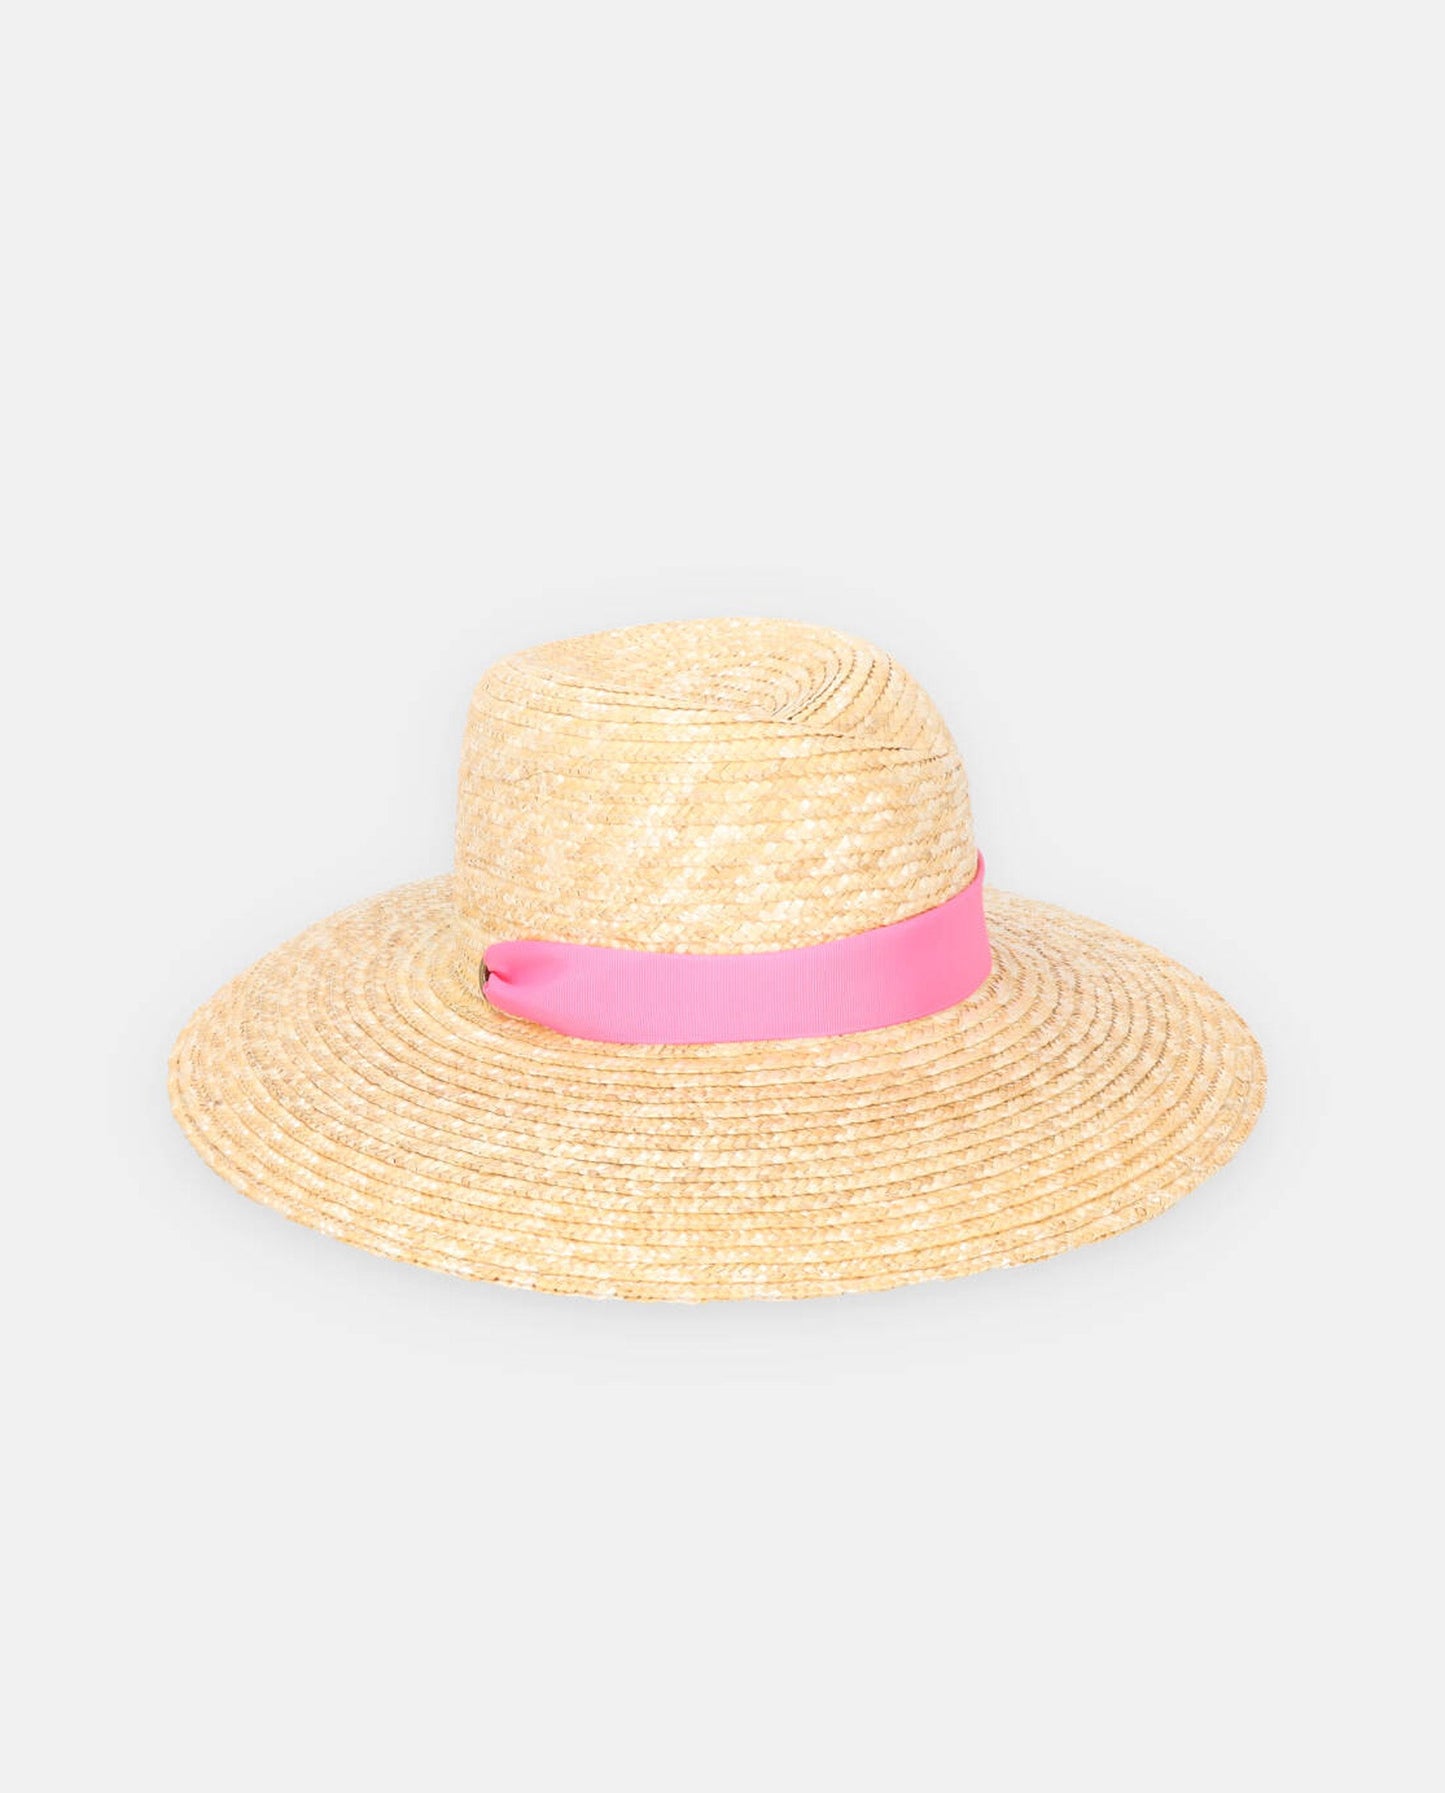 Beetle flow hat natural-pink- M brim